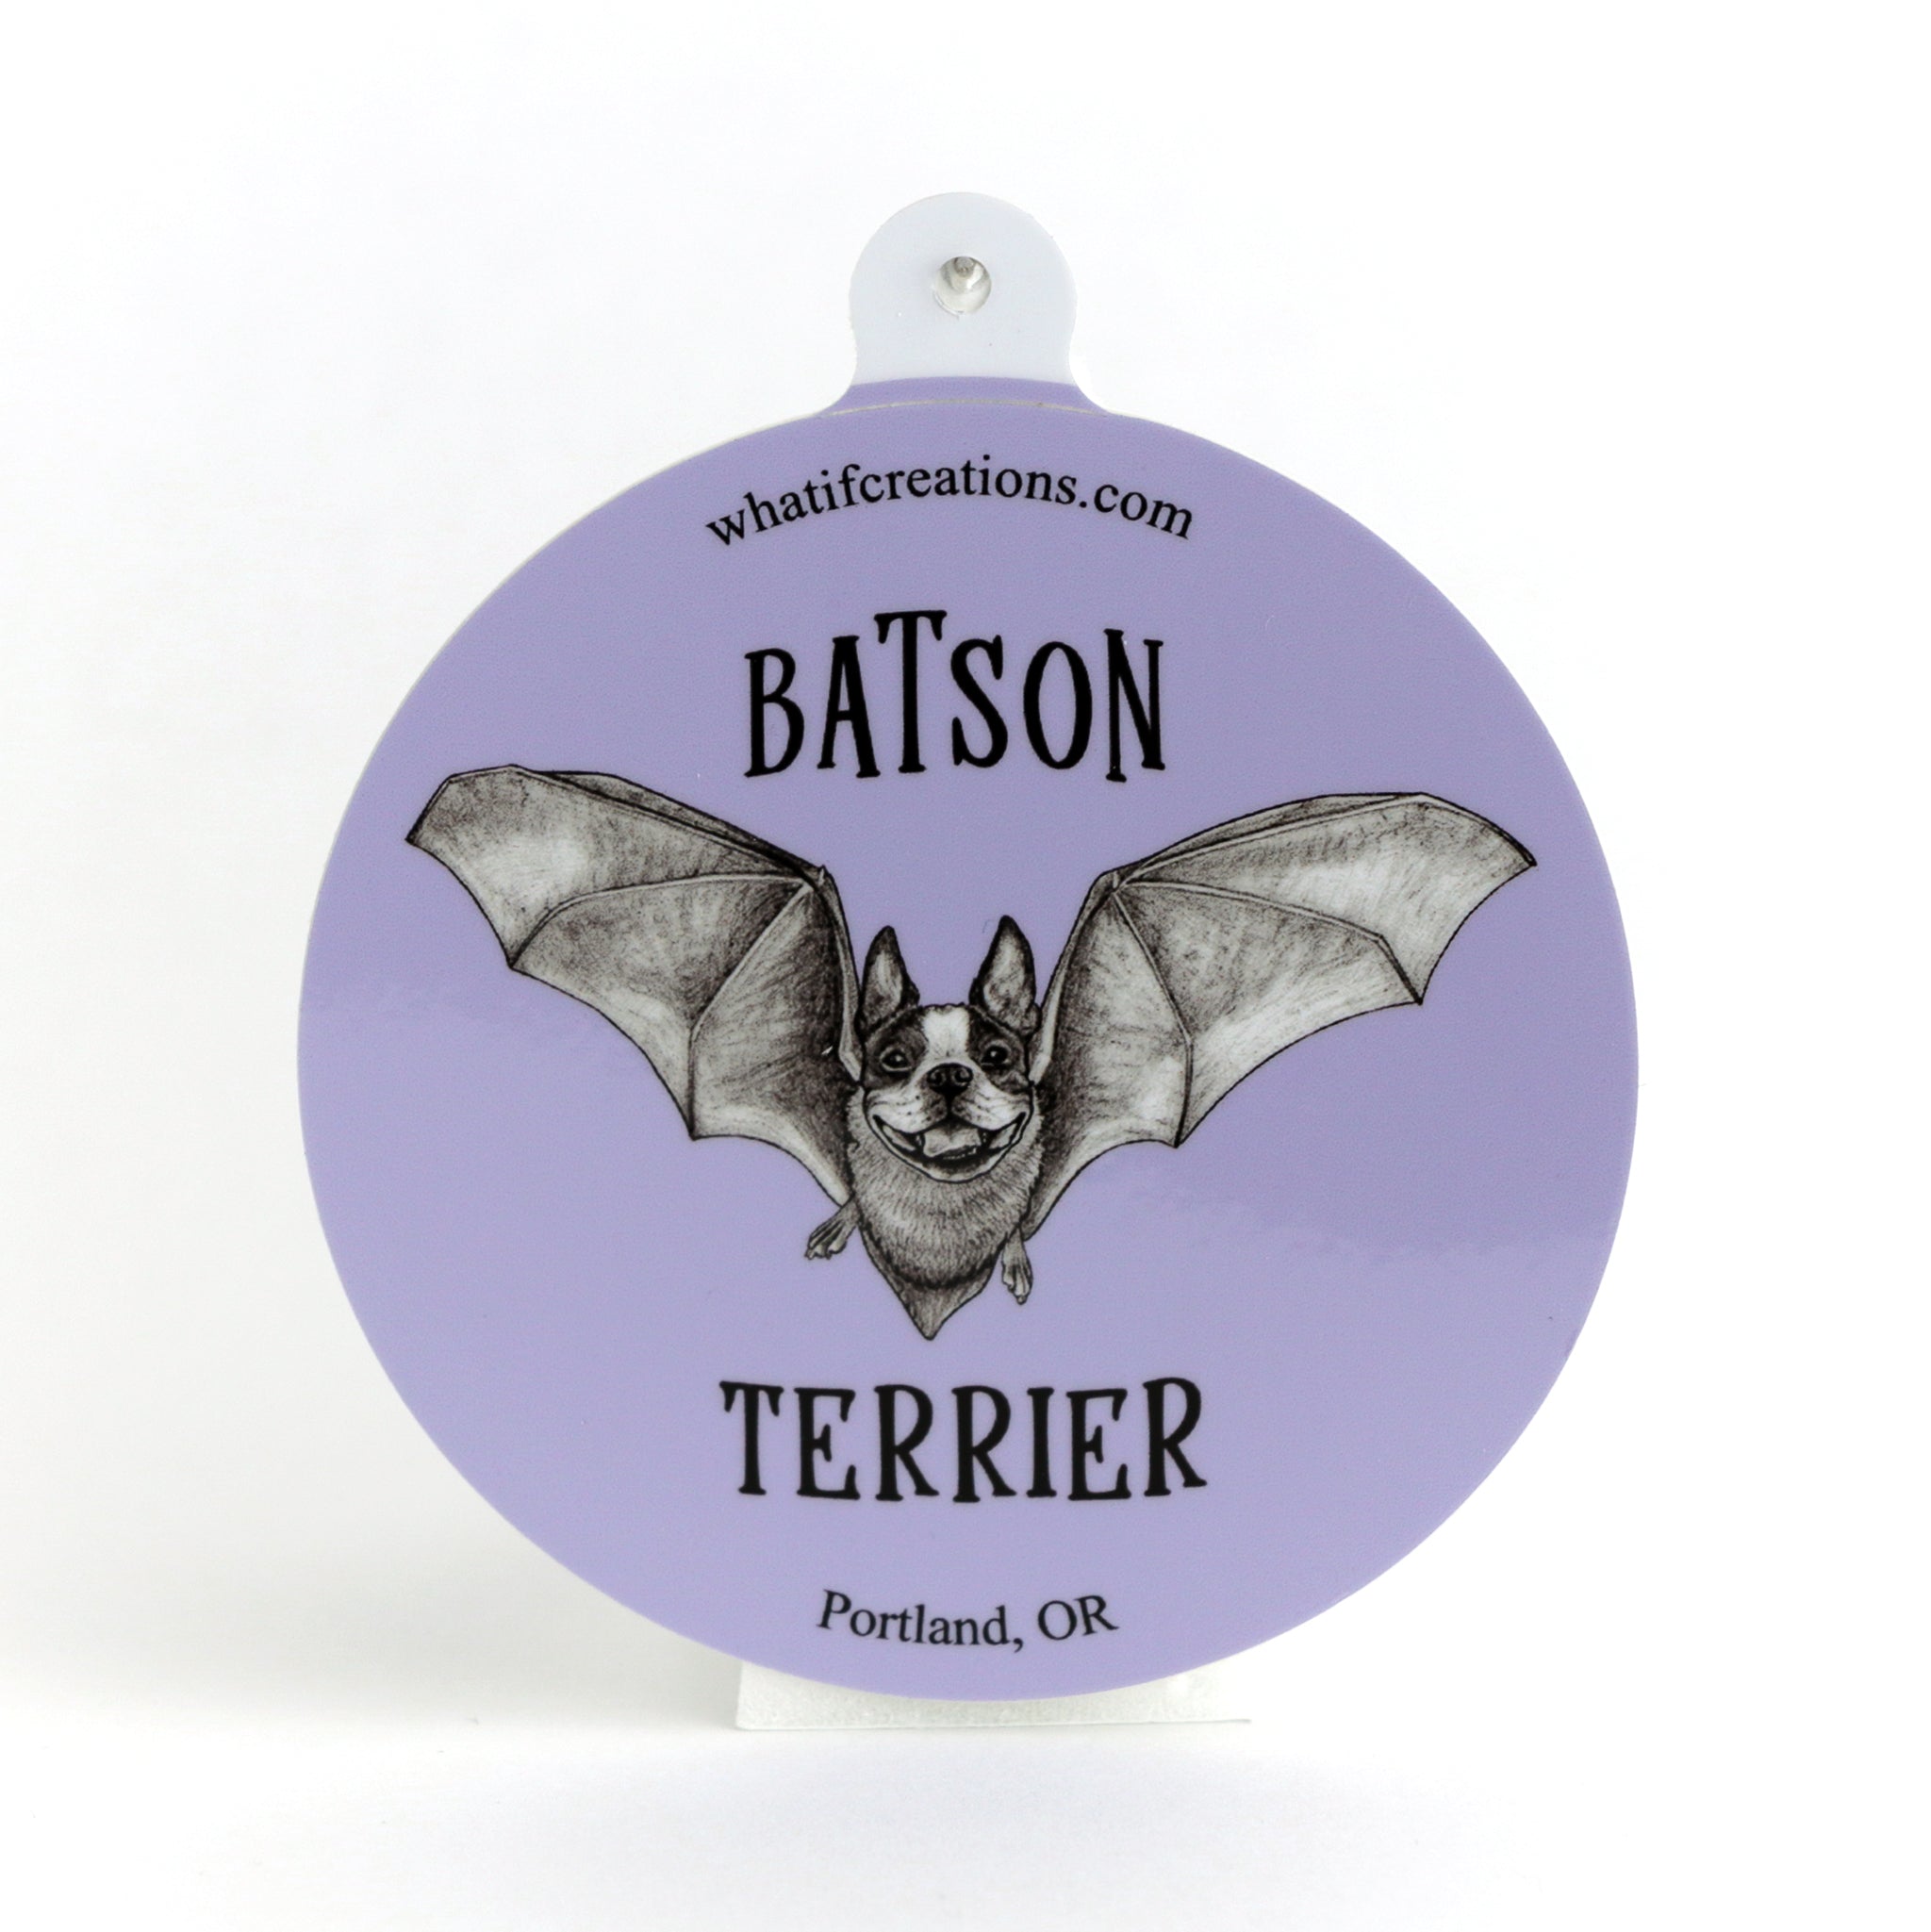 Batson Terrier 3" Vinyl Sticker